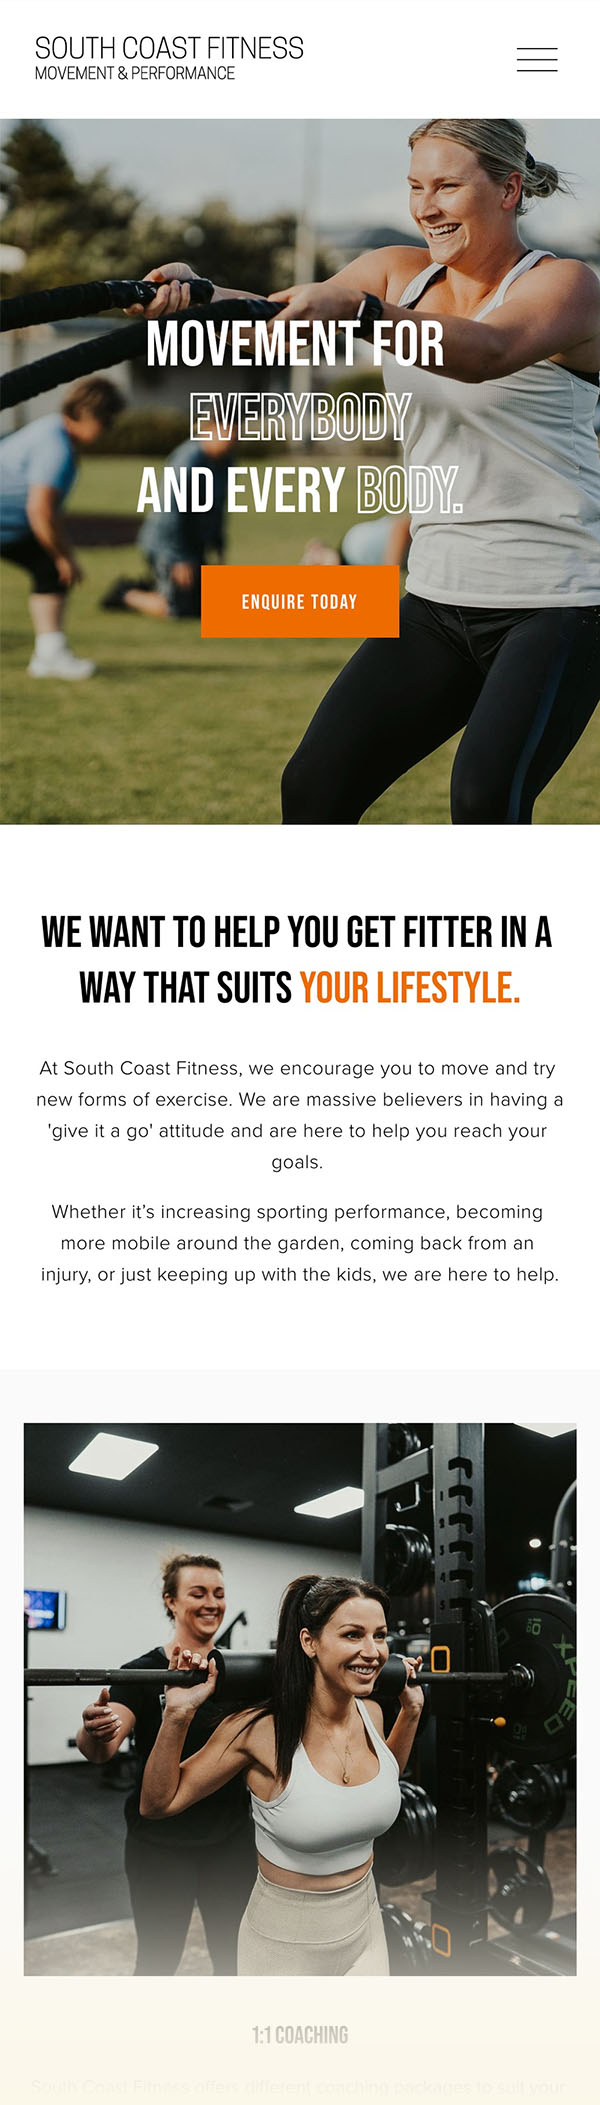 South Coast Fitness Website Design by Emma Hackett Design